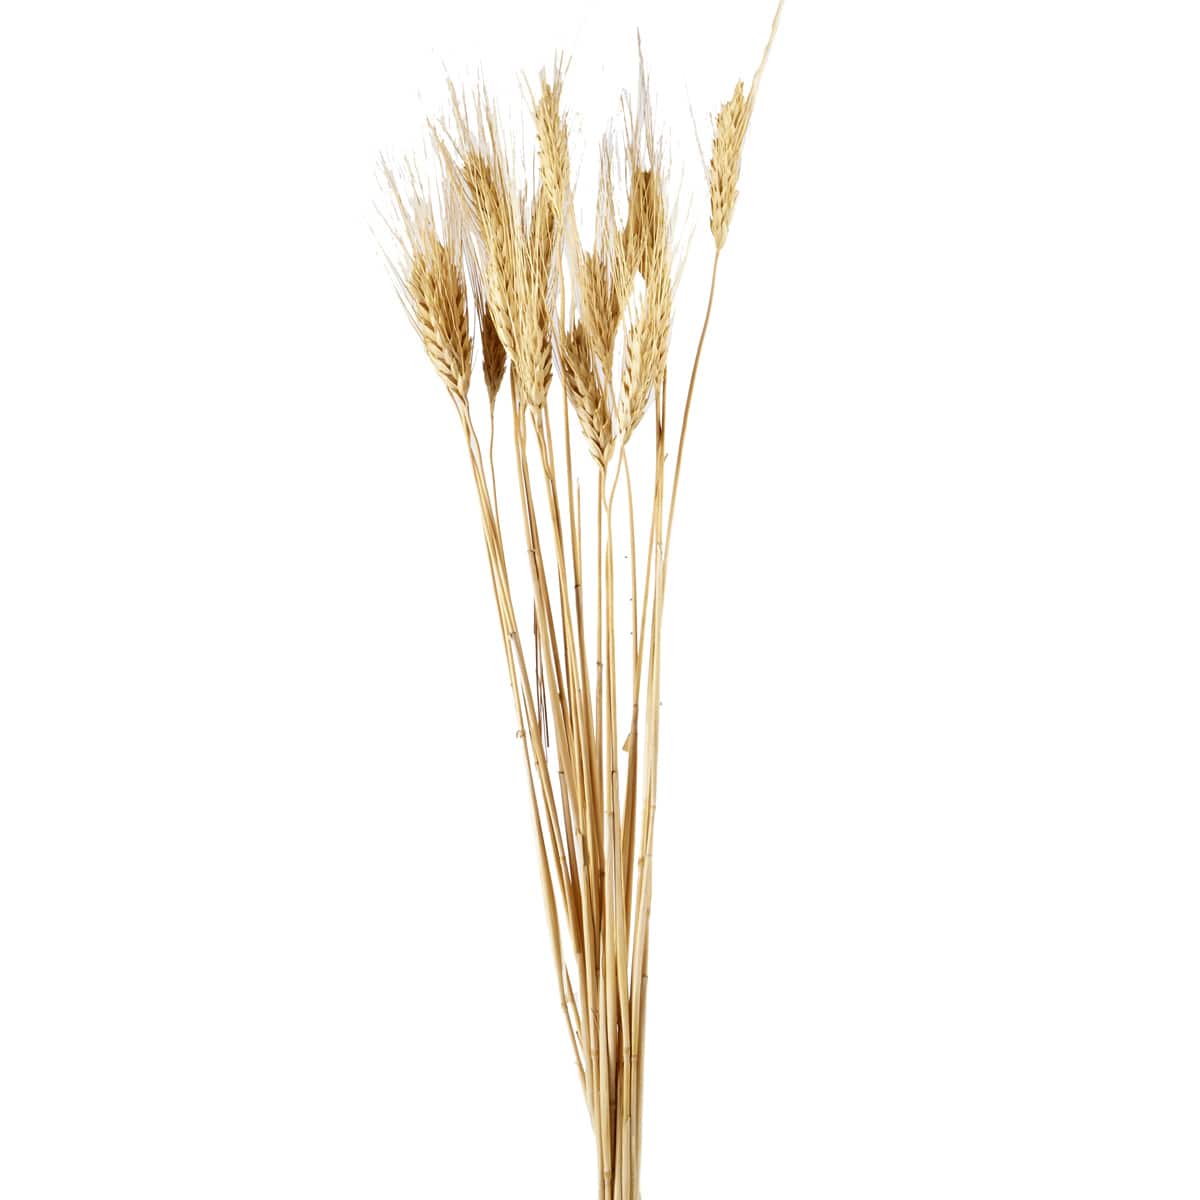 wheat bundle silhouette